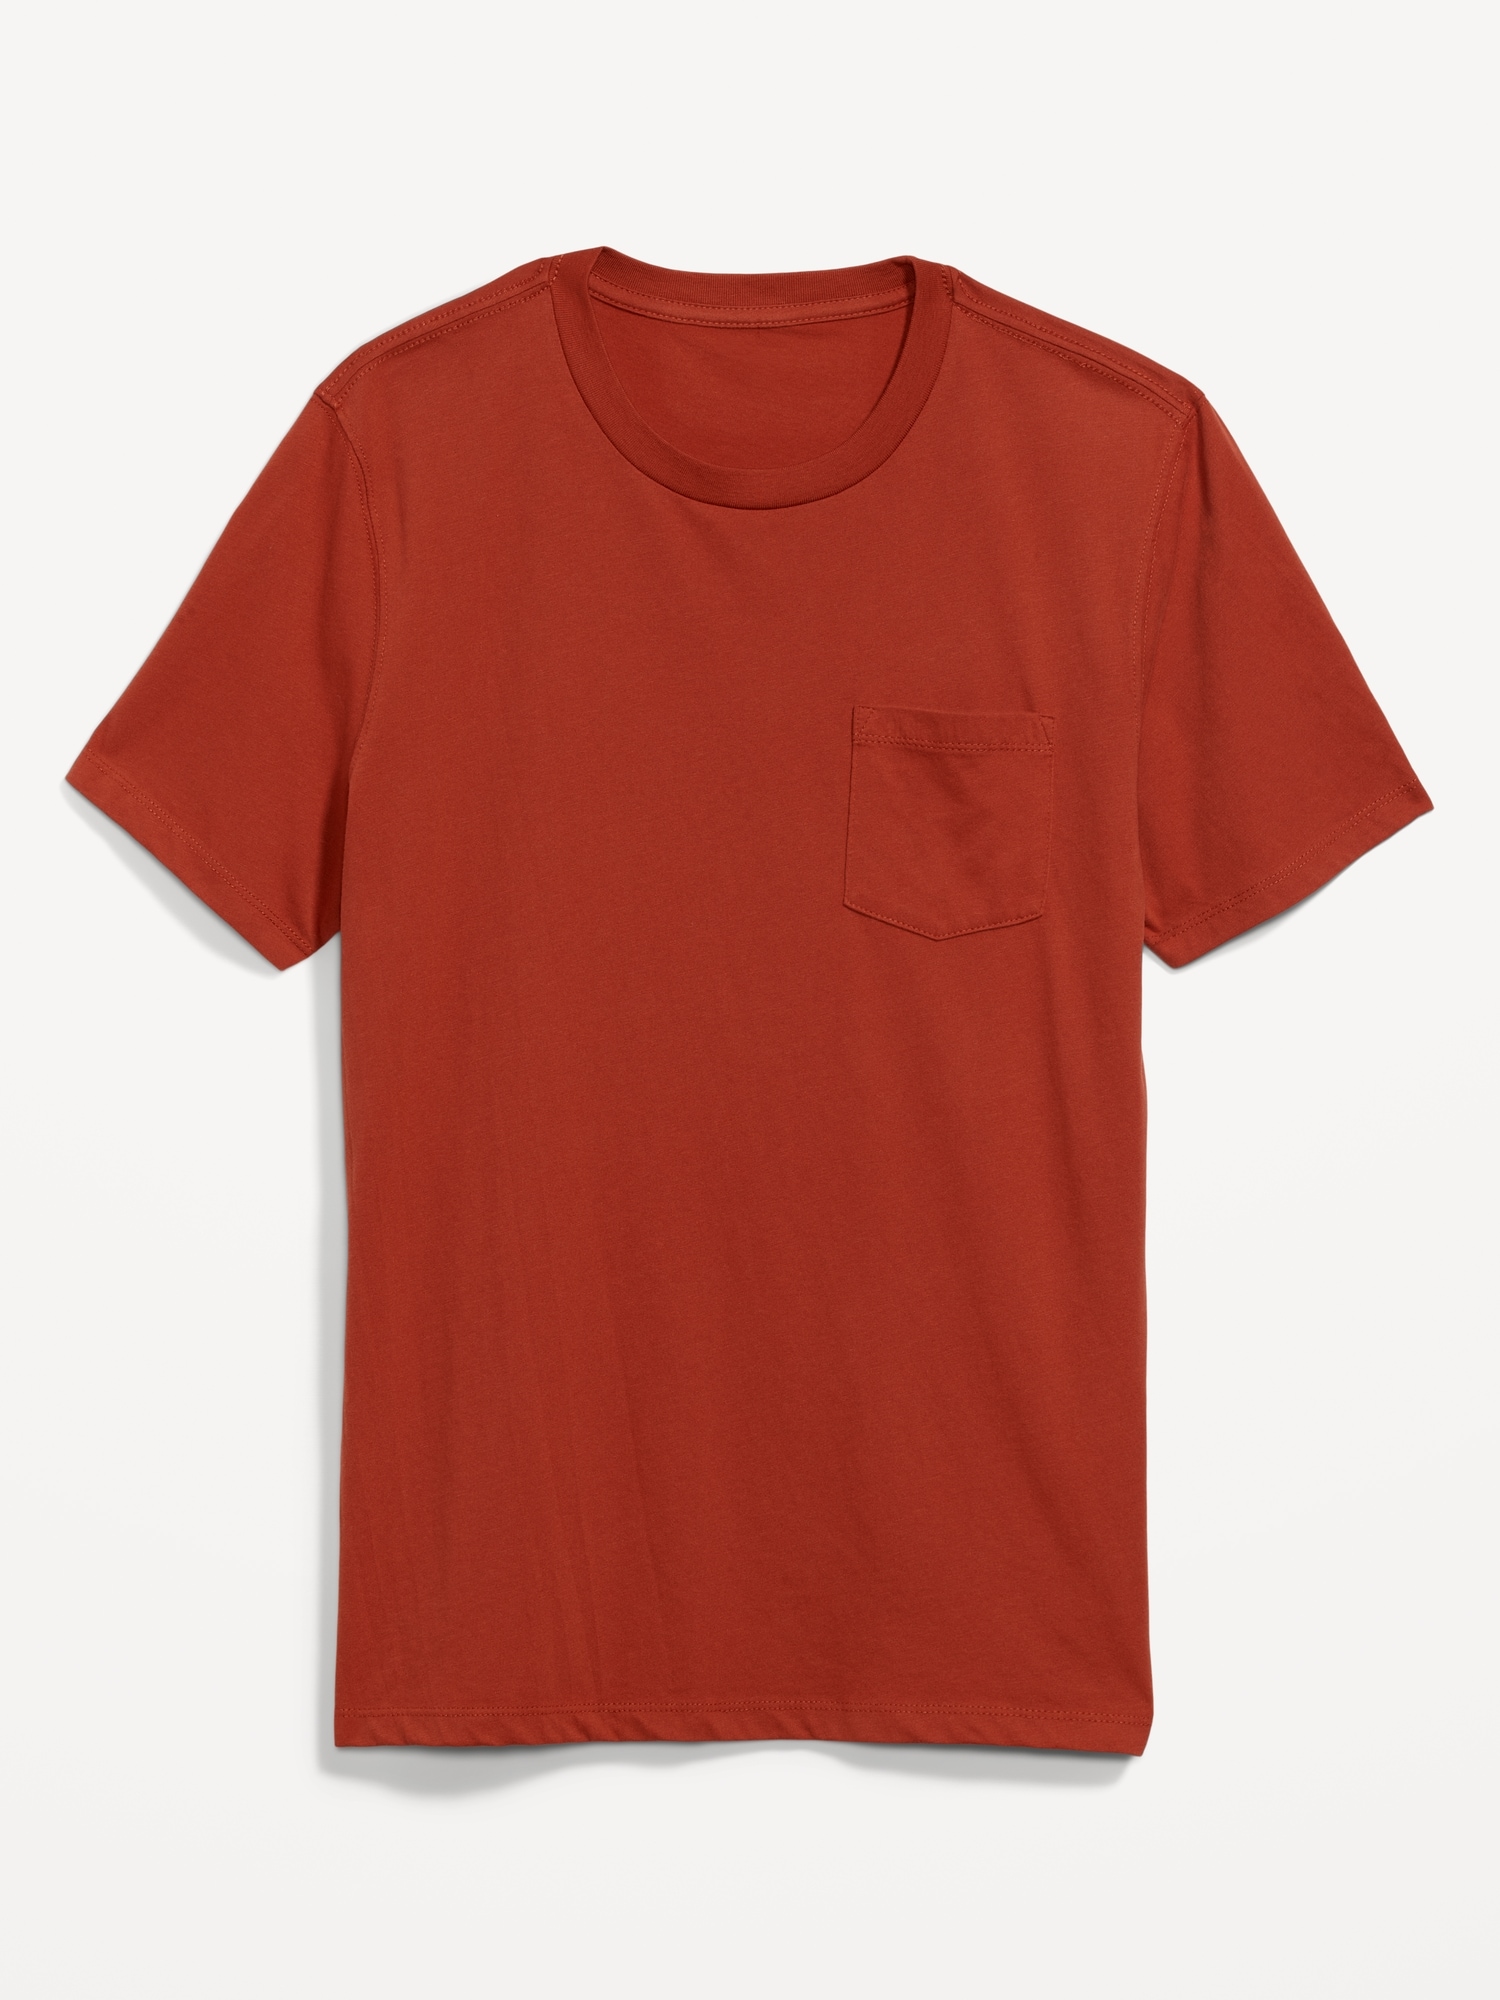 Shirts for Men Fashion Short Sleeve Crewneck T-Shirt Cotton Tee Pocket  Shirt Soft Fitted Tees (Light Blue, M) : : Fashion